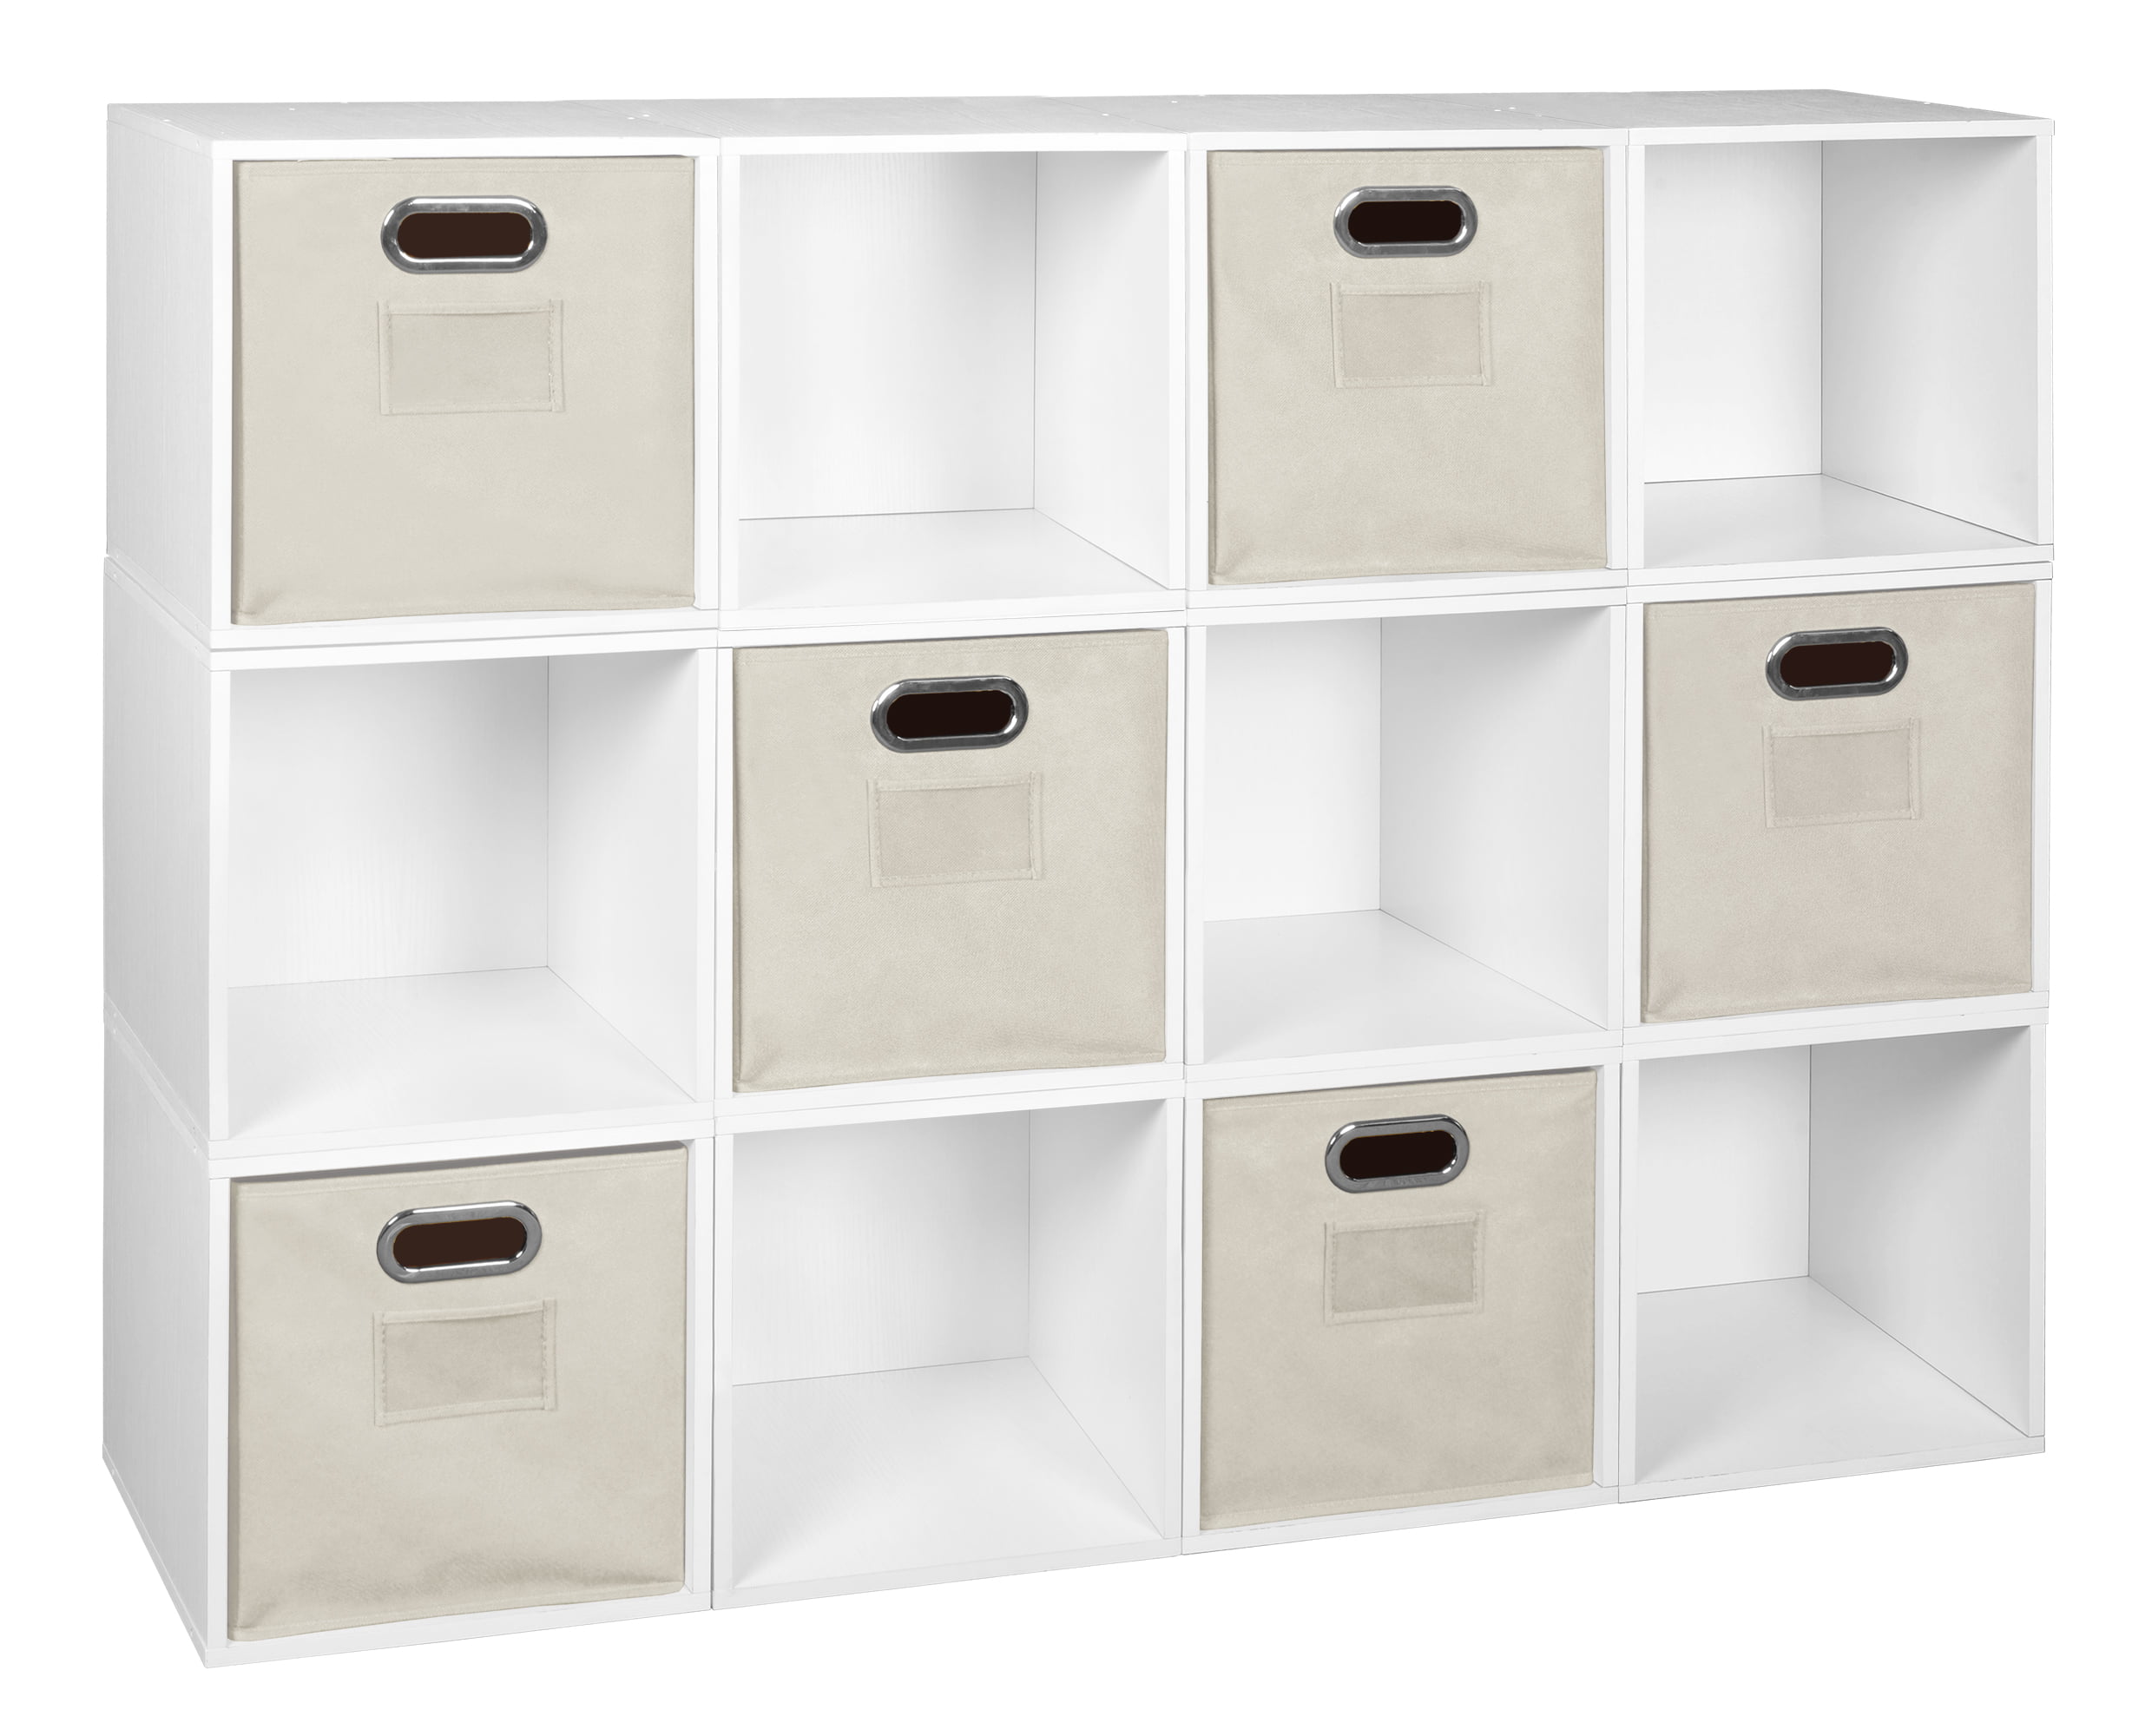 12-Cube Storage Unit Cubby Organizer Display Closet Bookcase Shelf Box Bin White